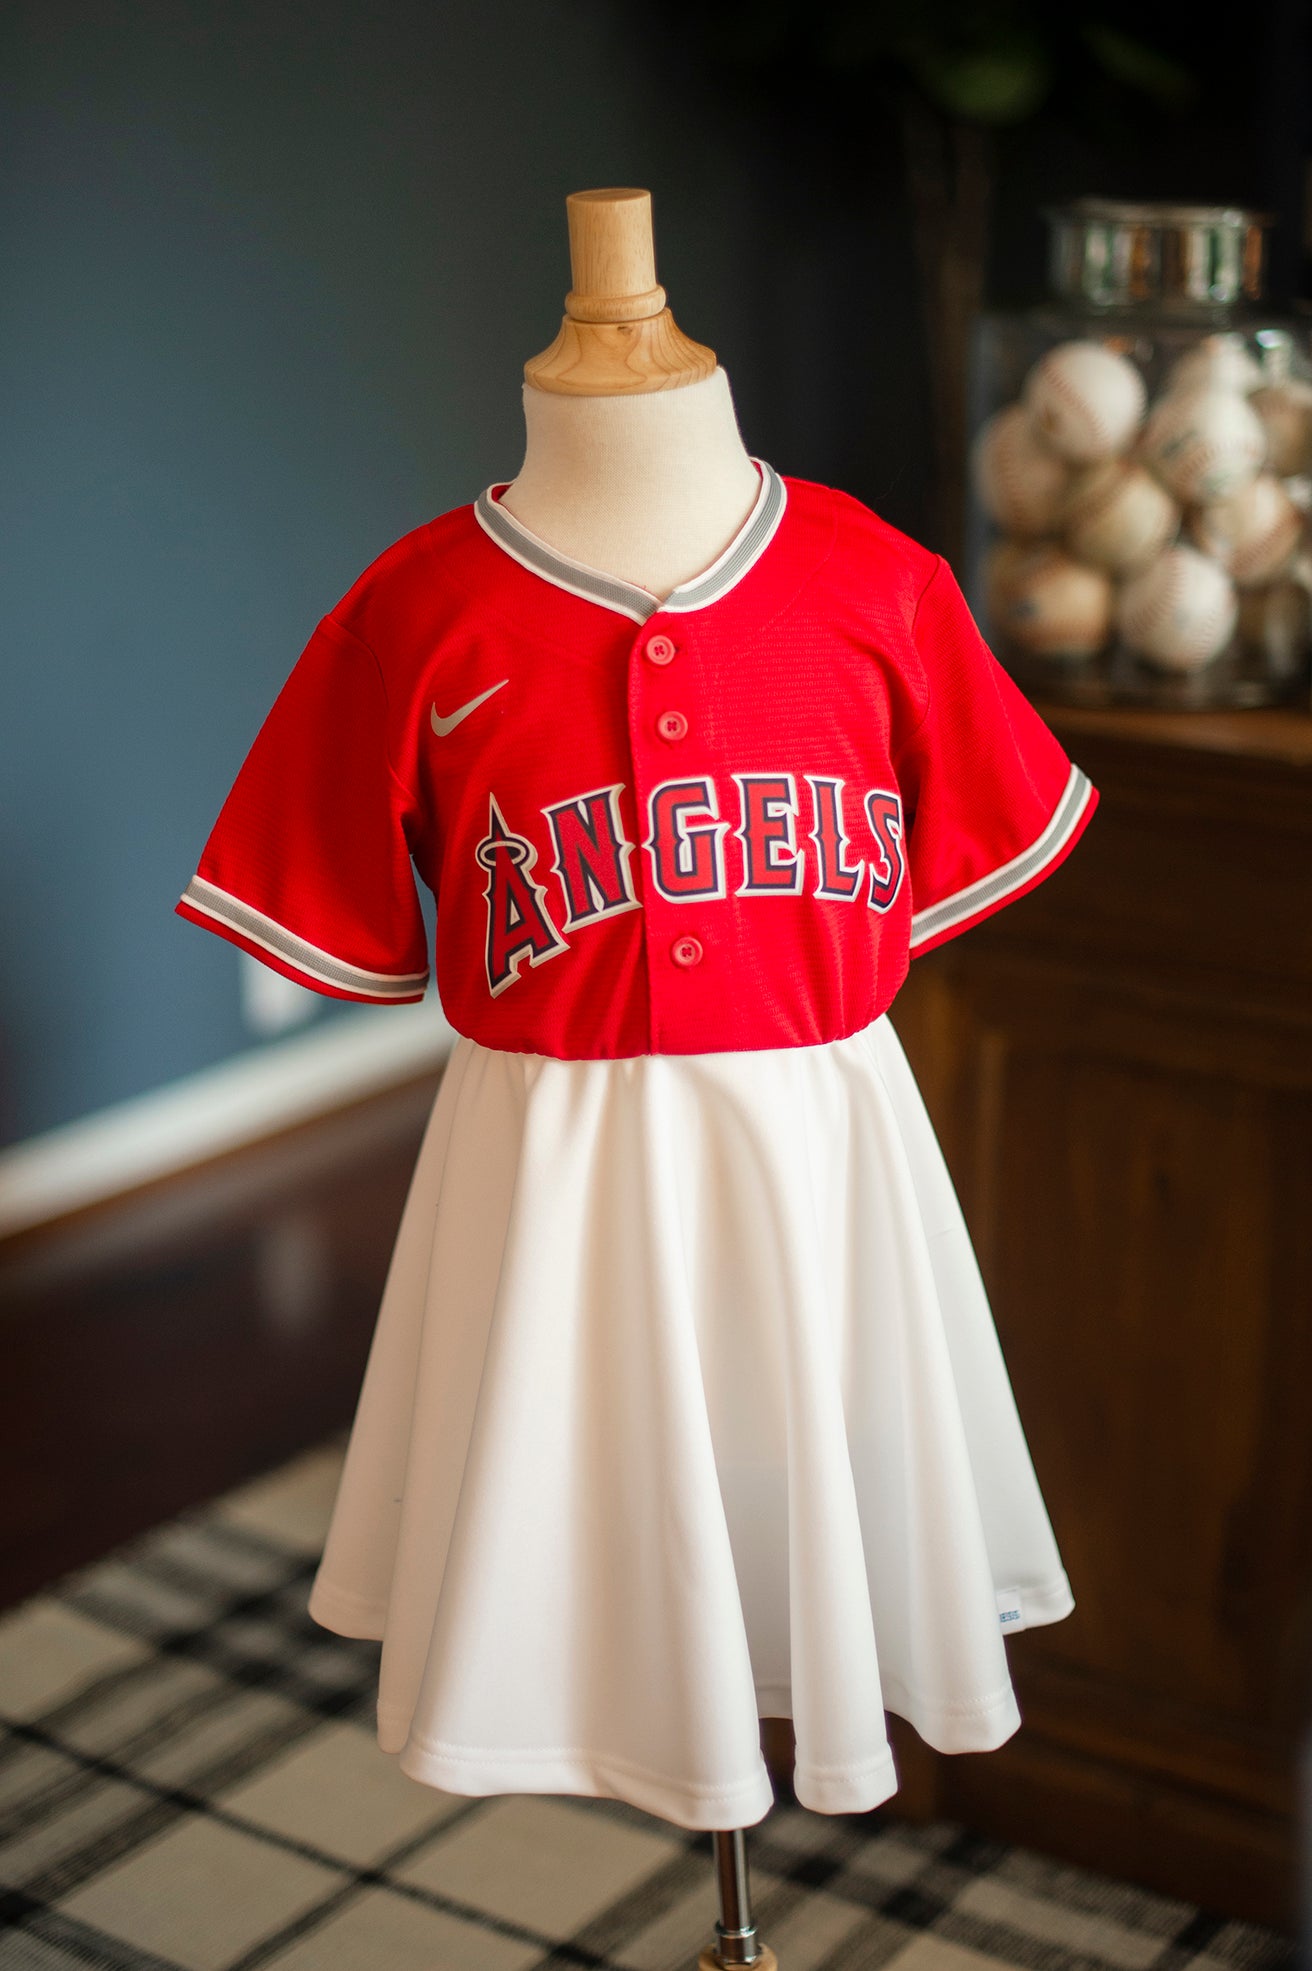 Los Angeles Angels Jerseys in Los Angeles Angels Team Shop 